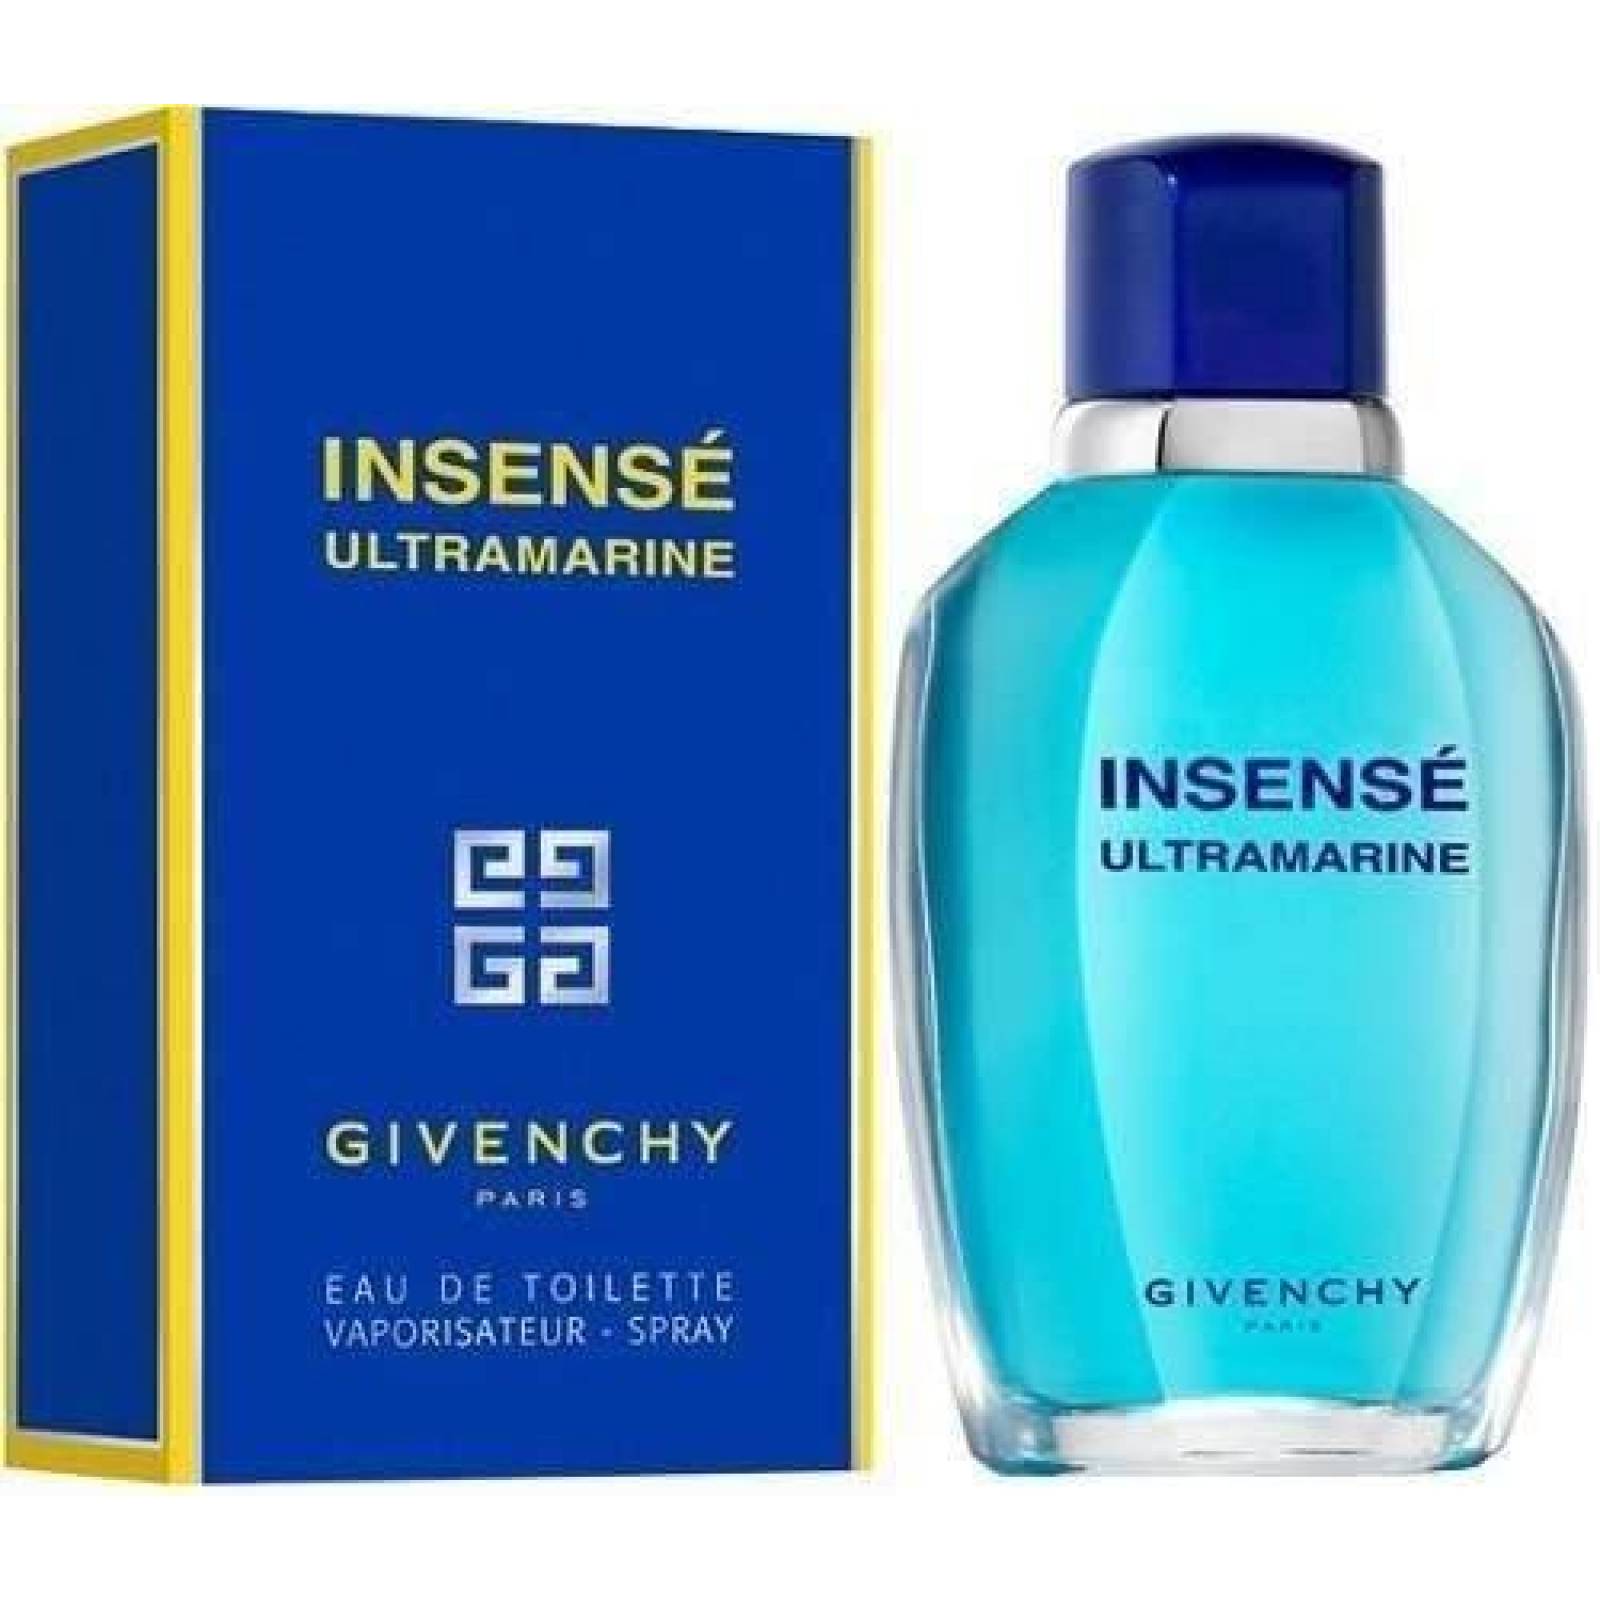 Insense Ultramarine Caballero 100 Ml Givenchy Spray